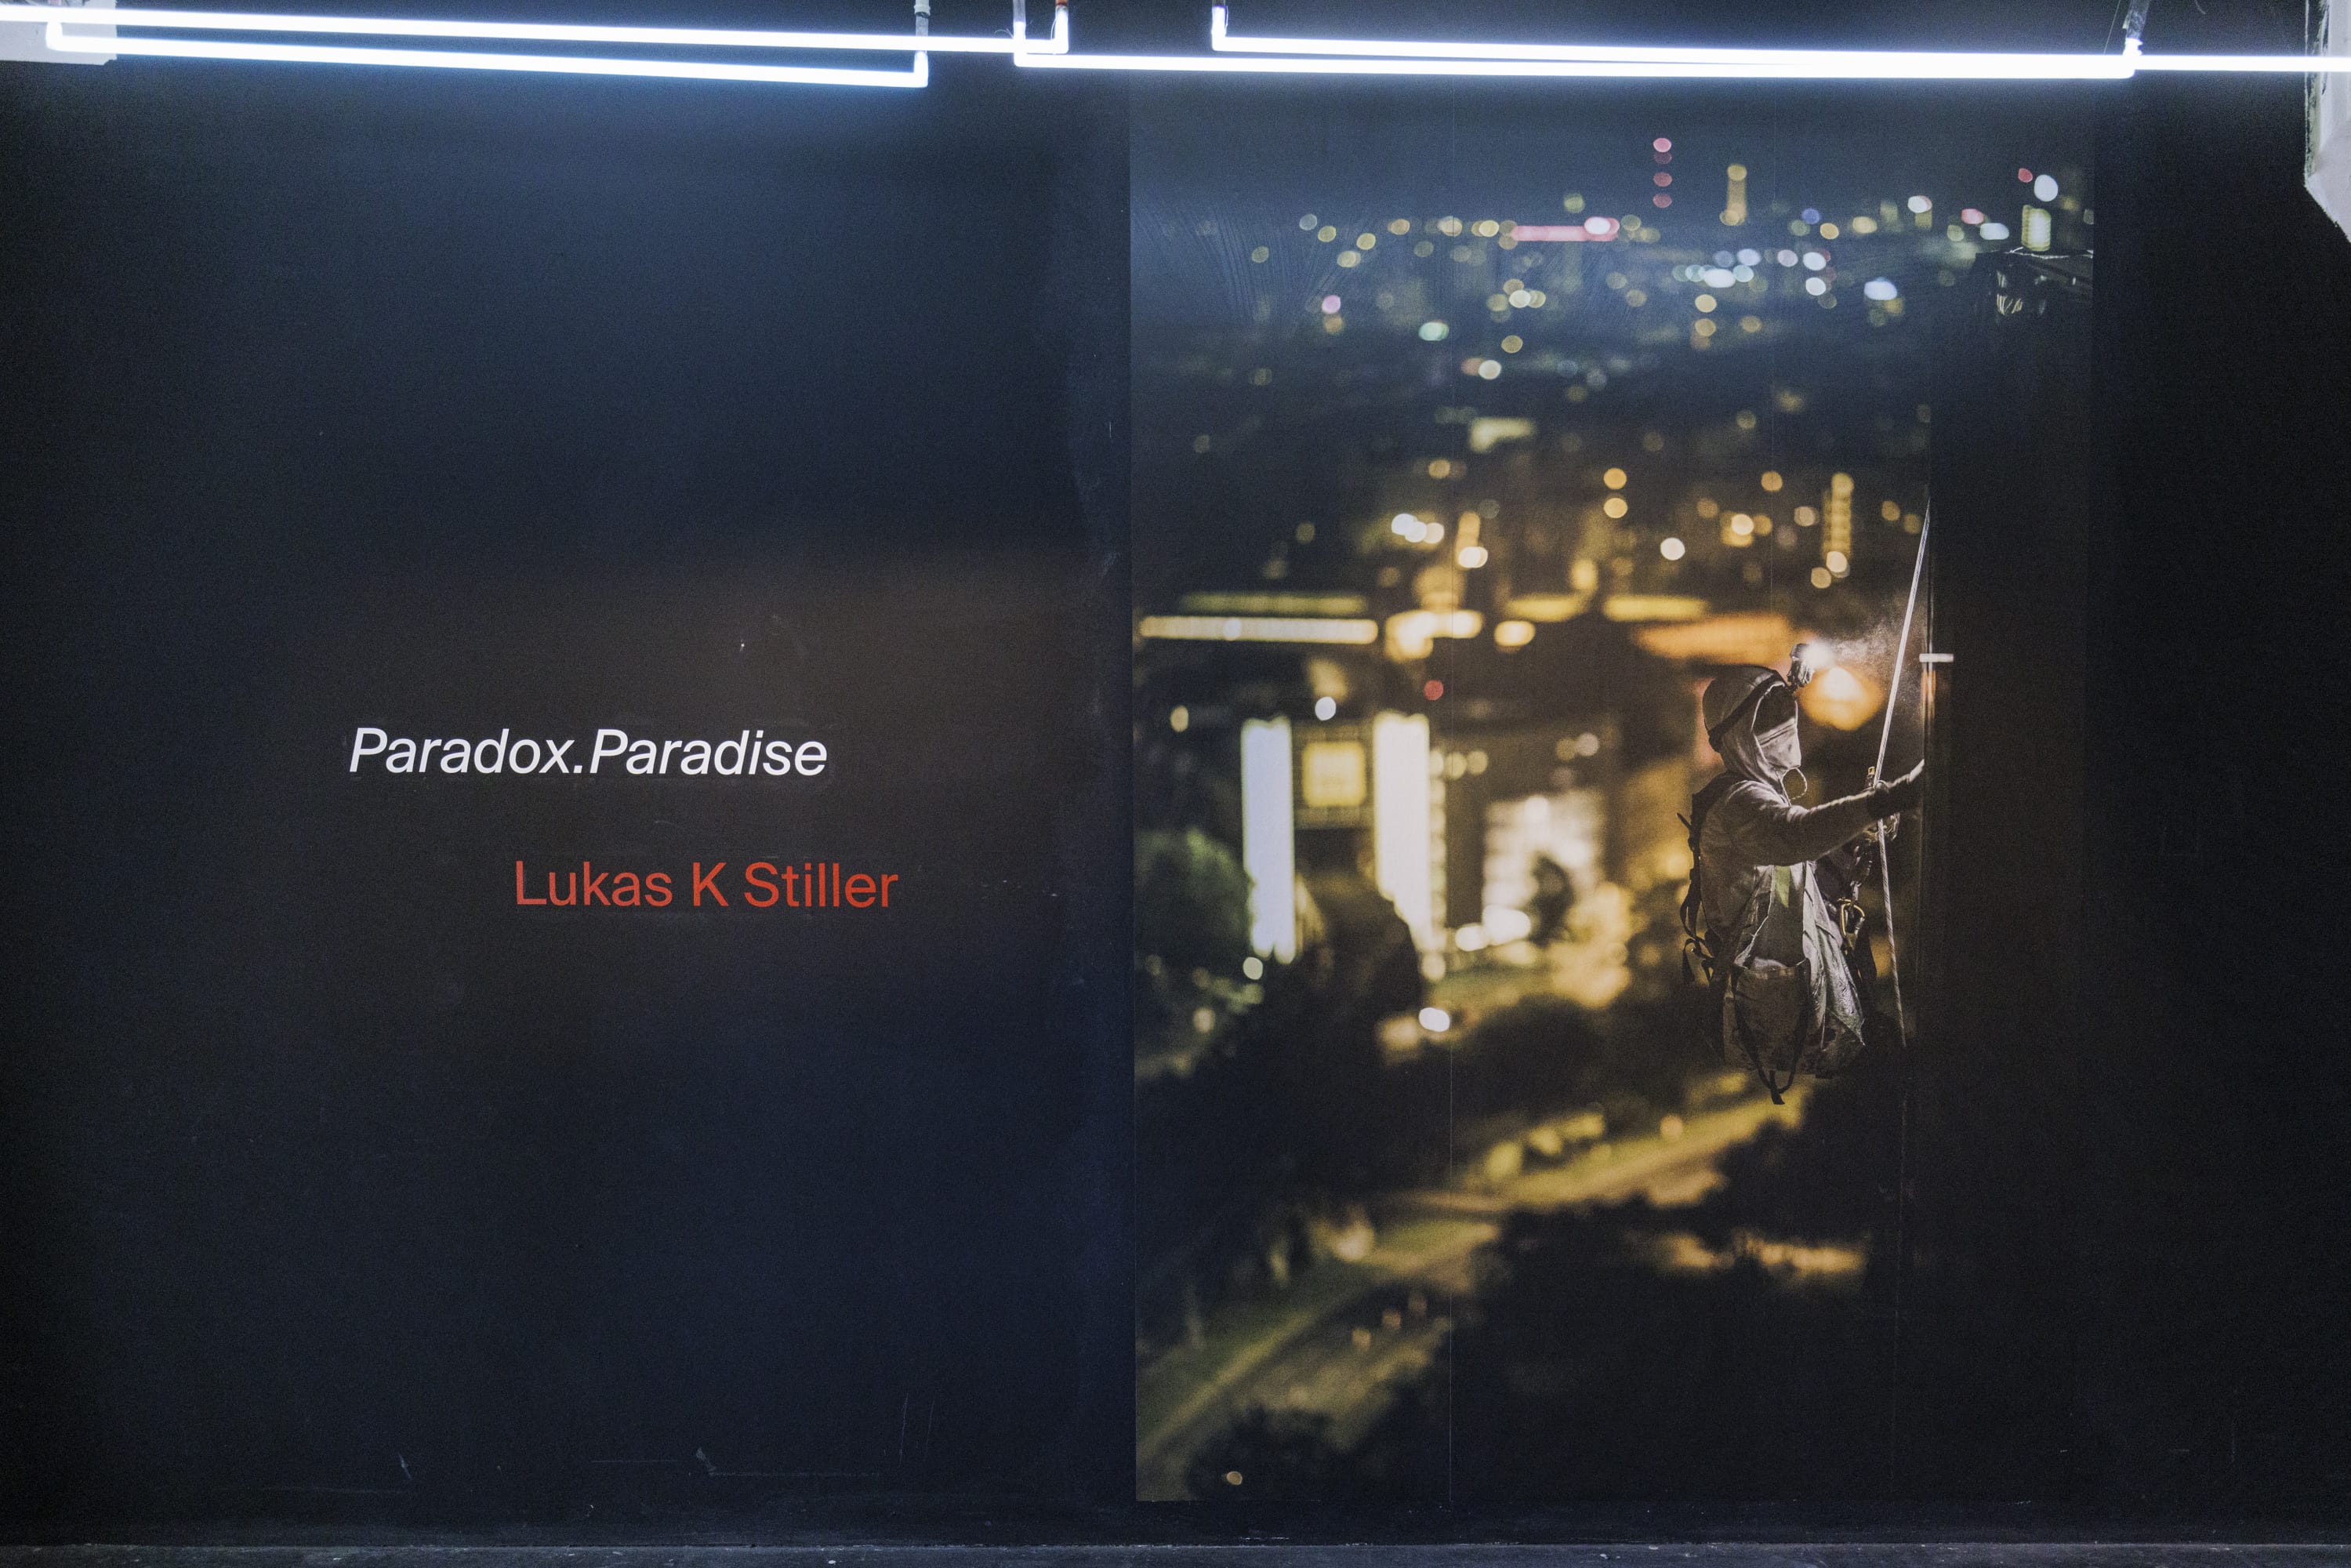 Paradox.Paradise the Exhibition